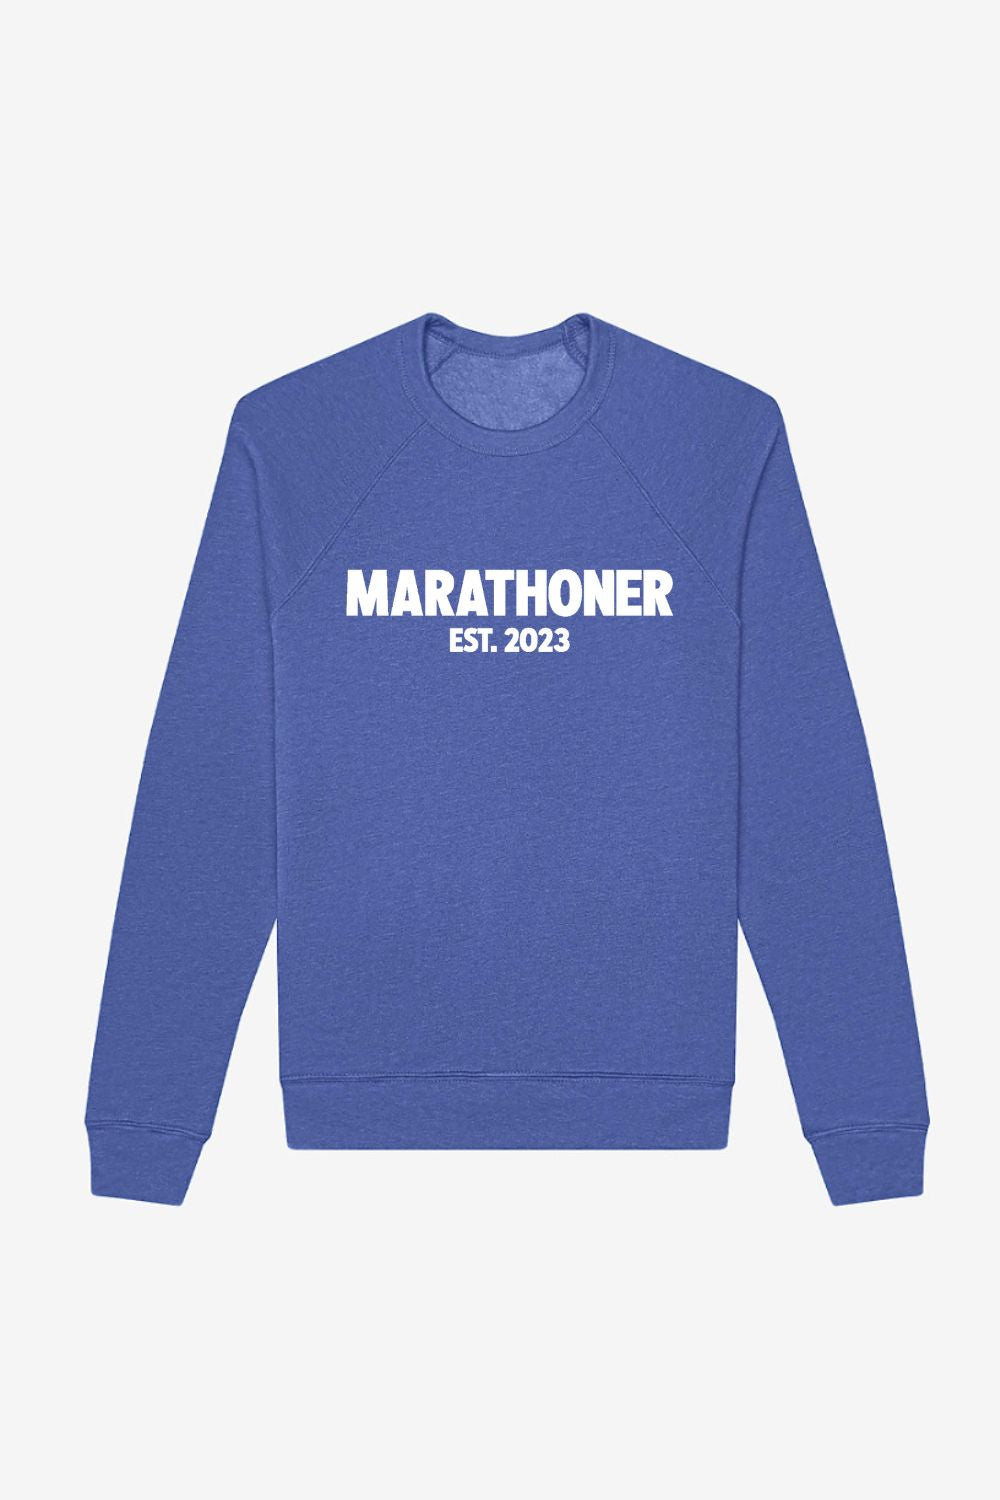 Marathoner EST 2023 Sweatshirt